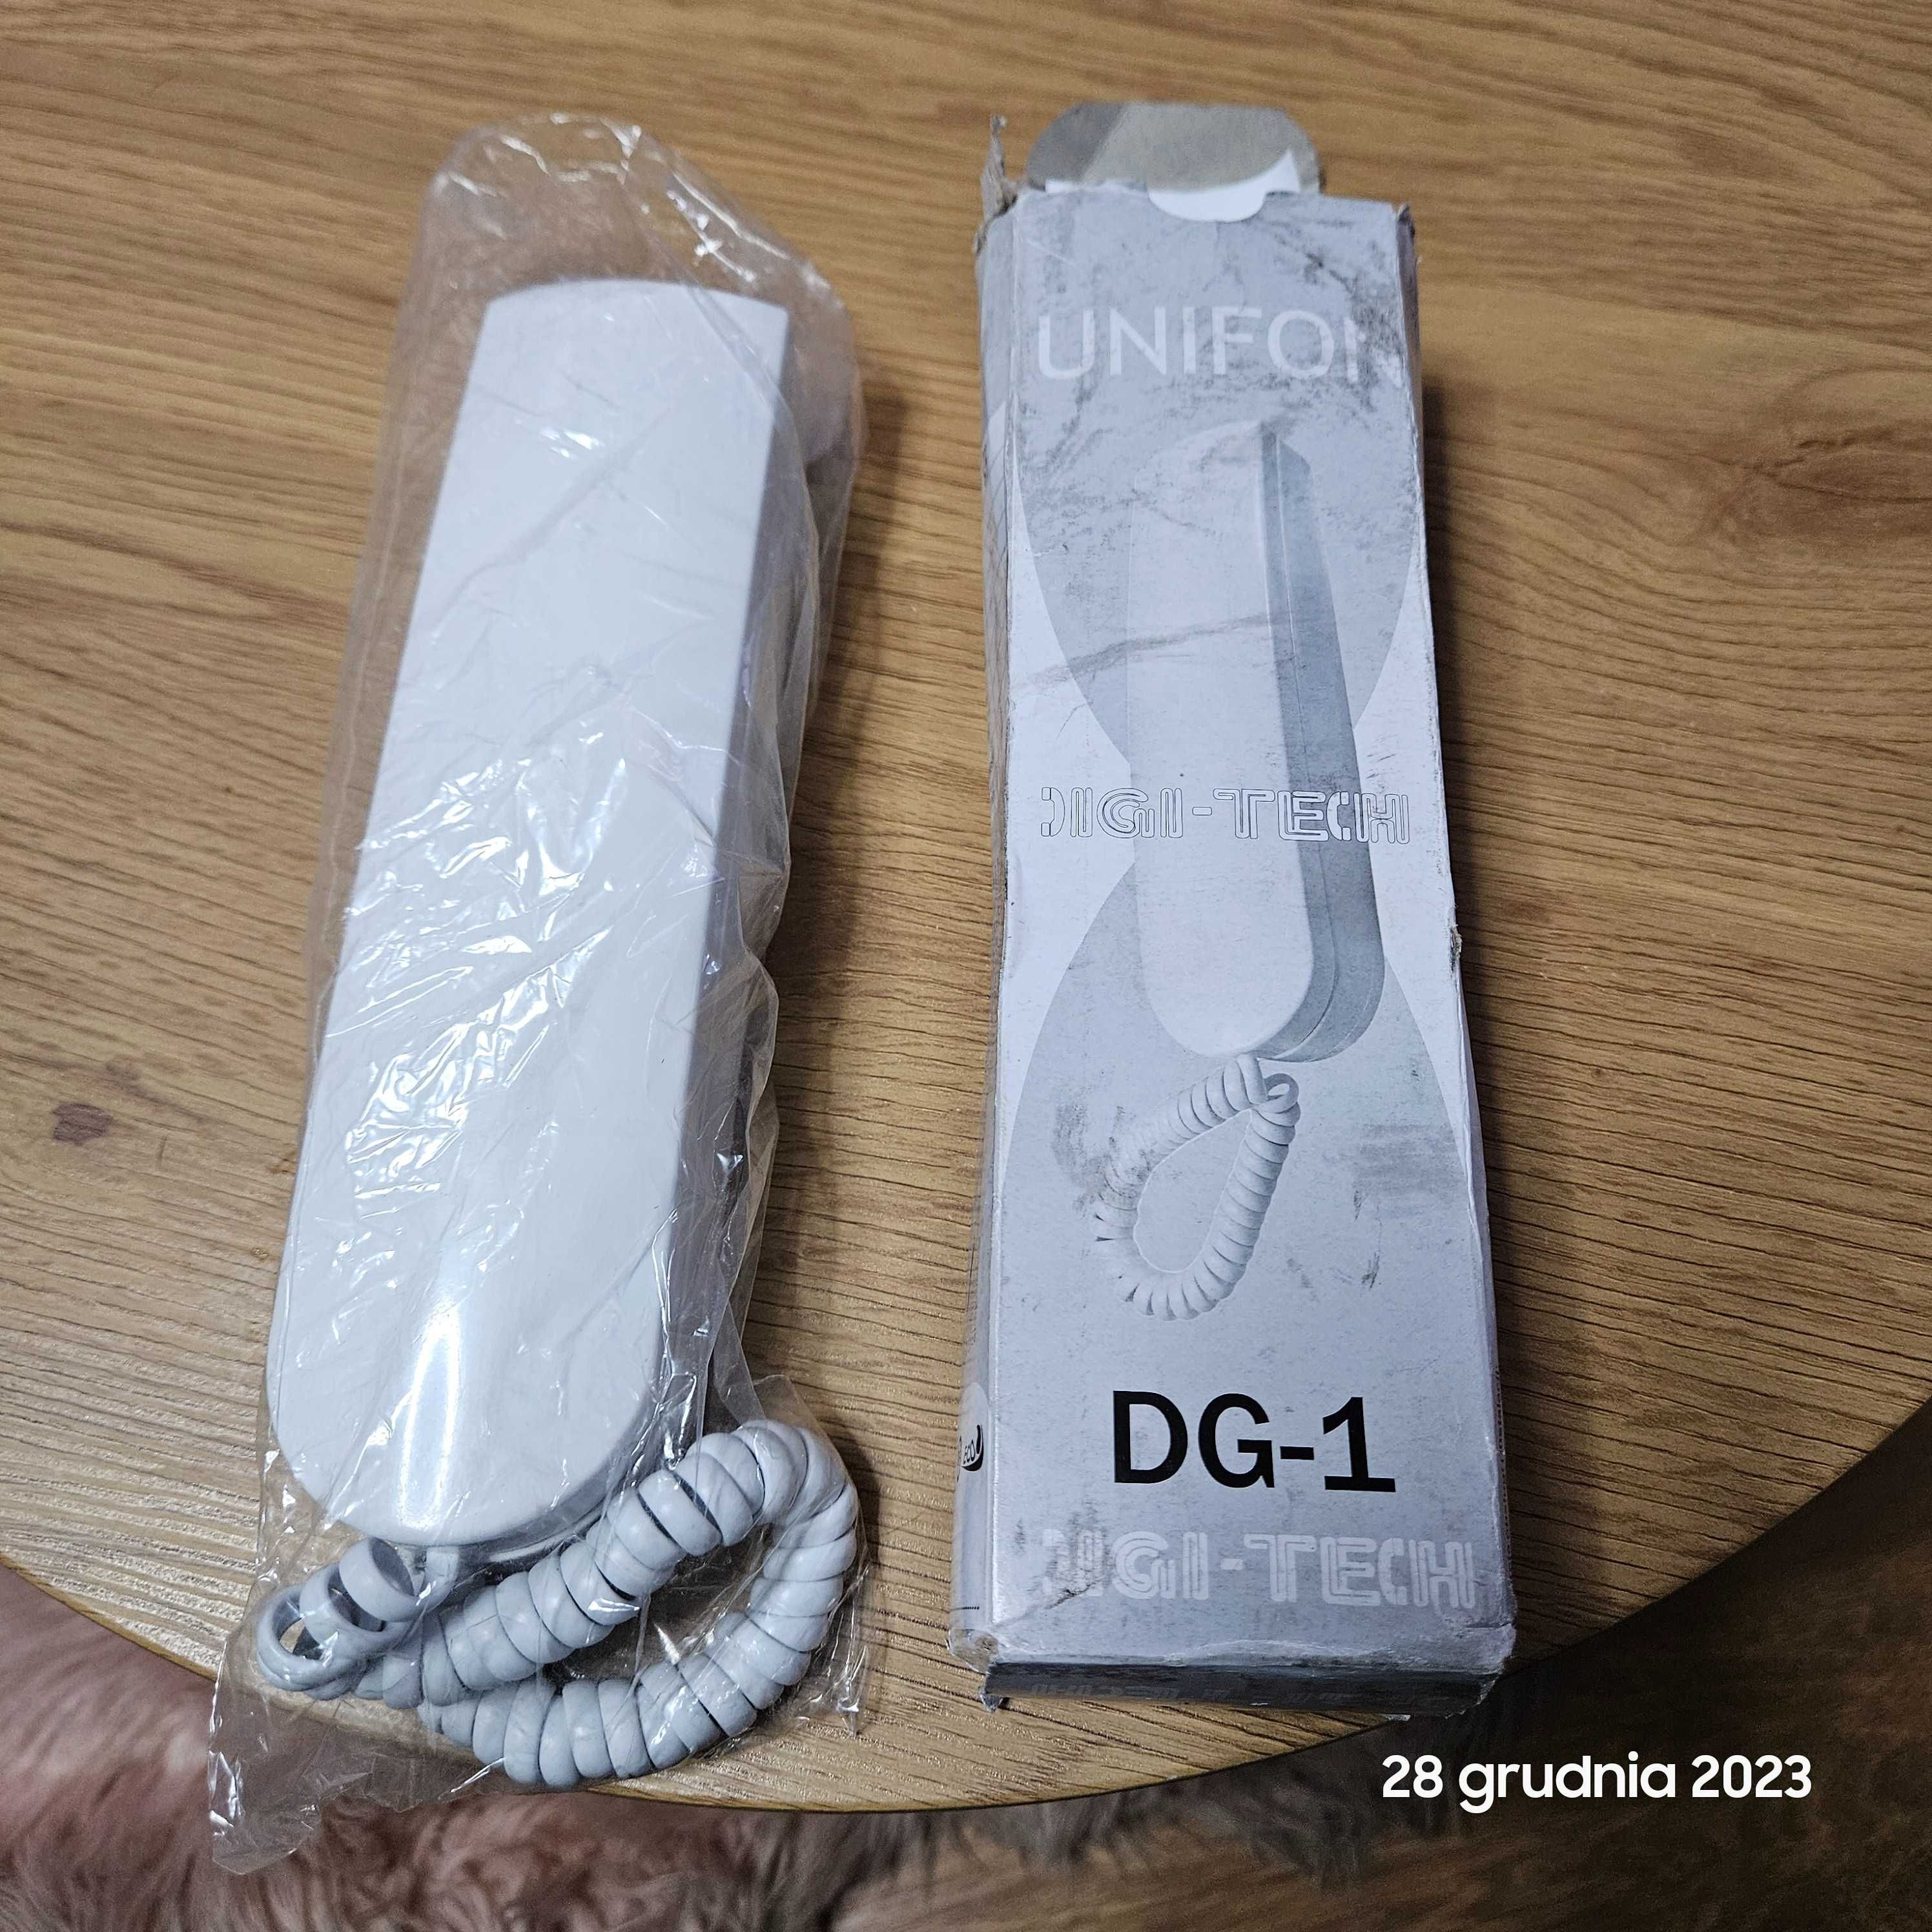 Unifon cyfrowy Digi-Tech DG-1